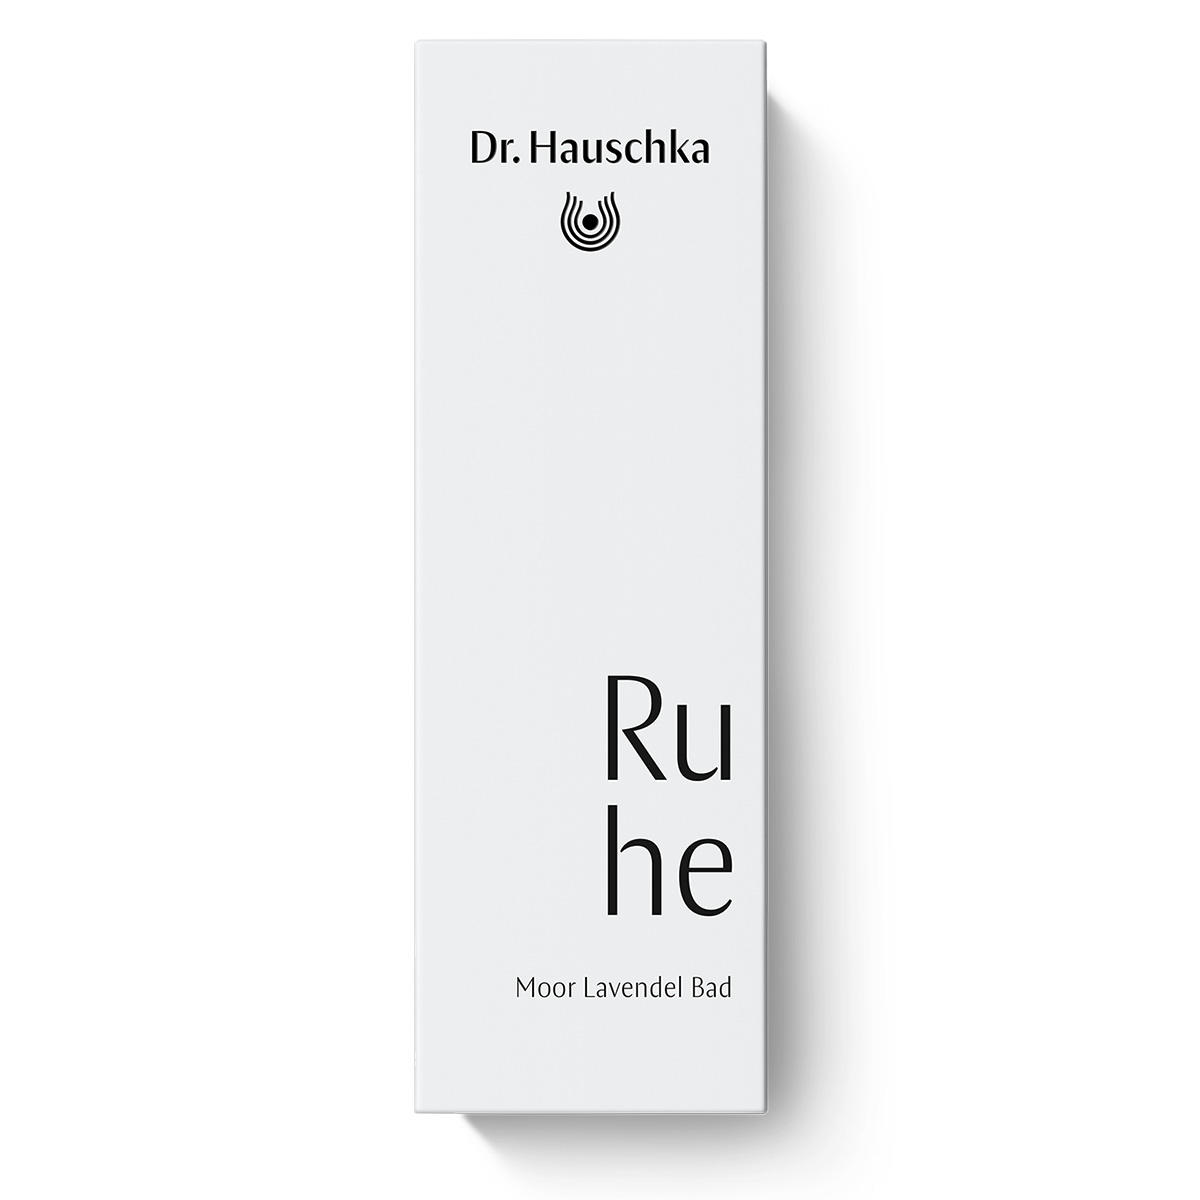 Dr. Hauschka Moor Lavendel Bad "Ruhe" 100 ml - 2